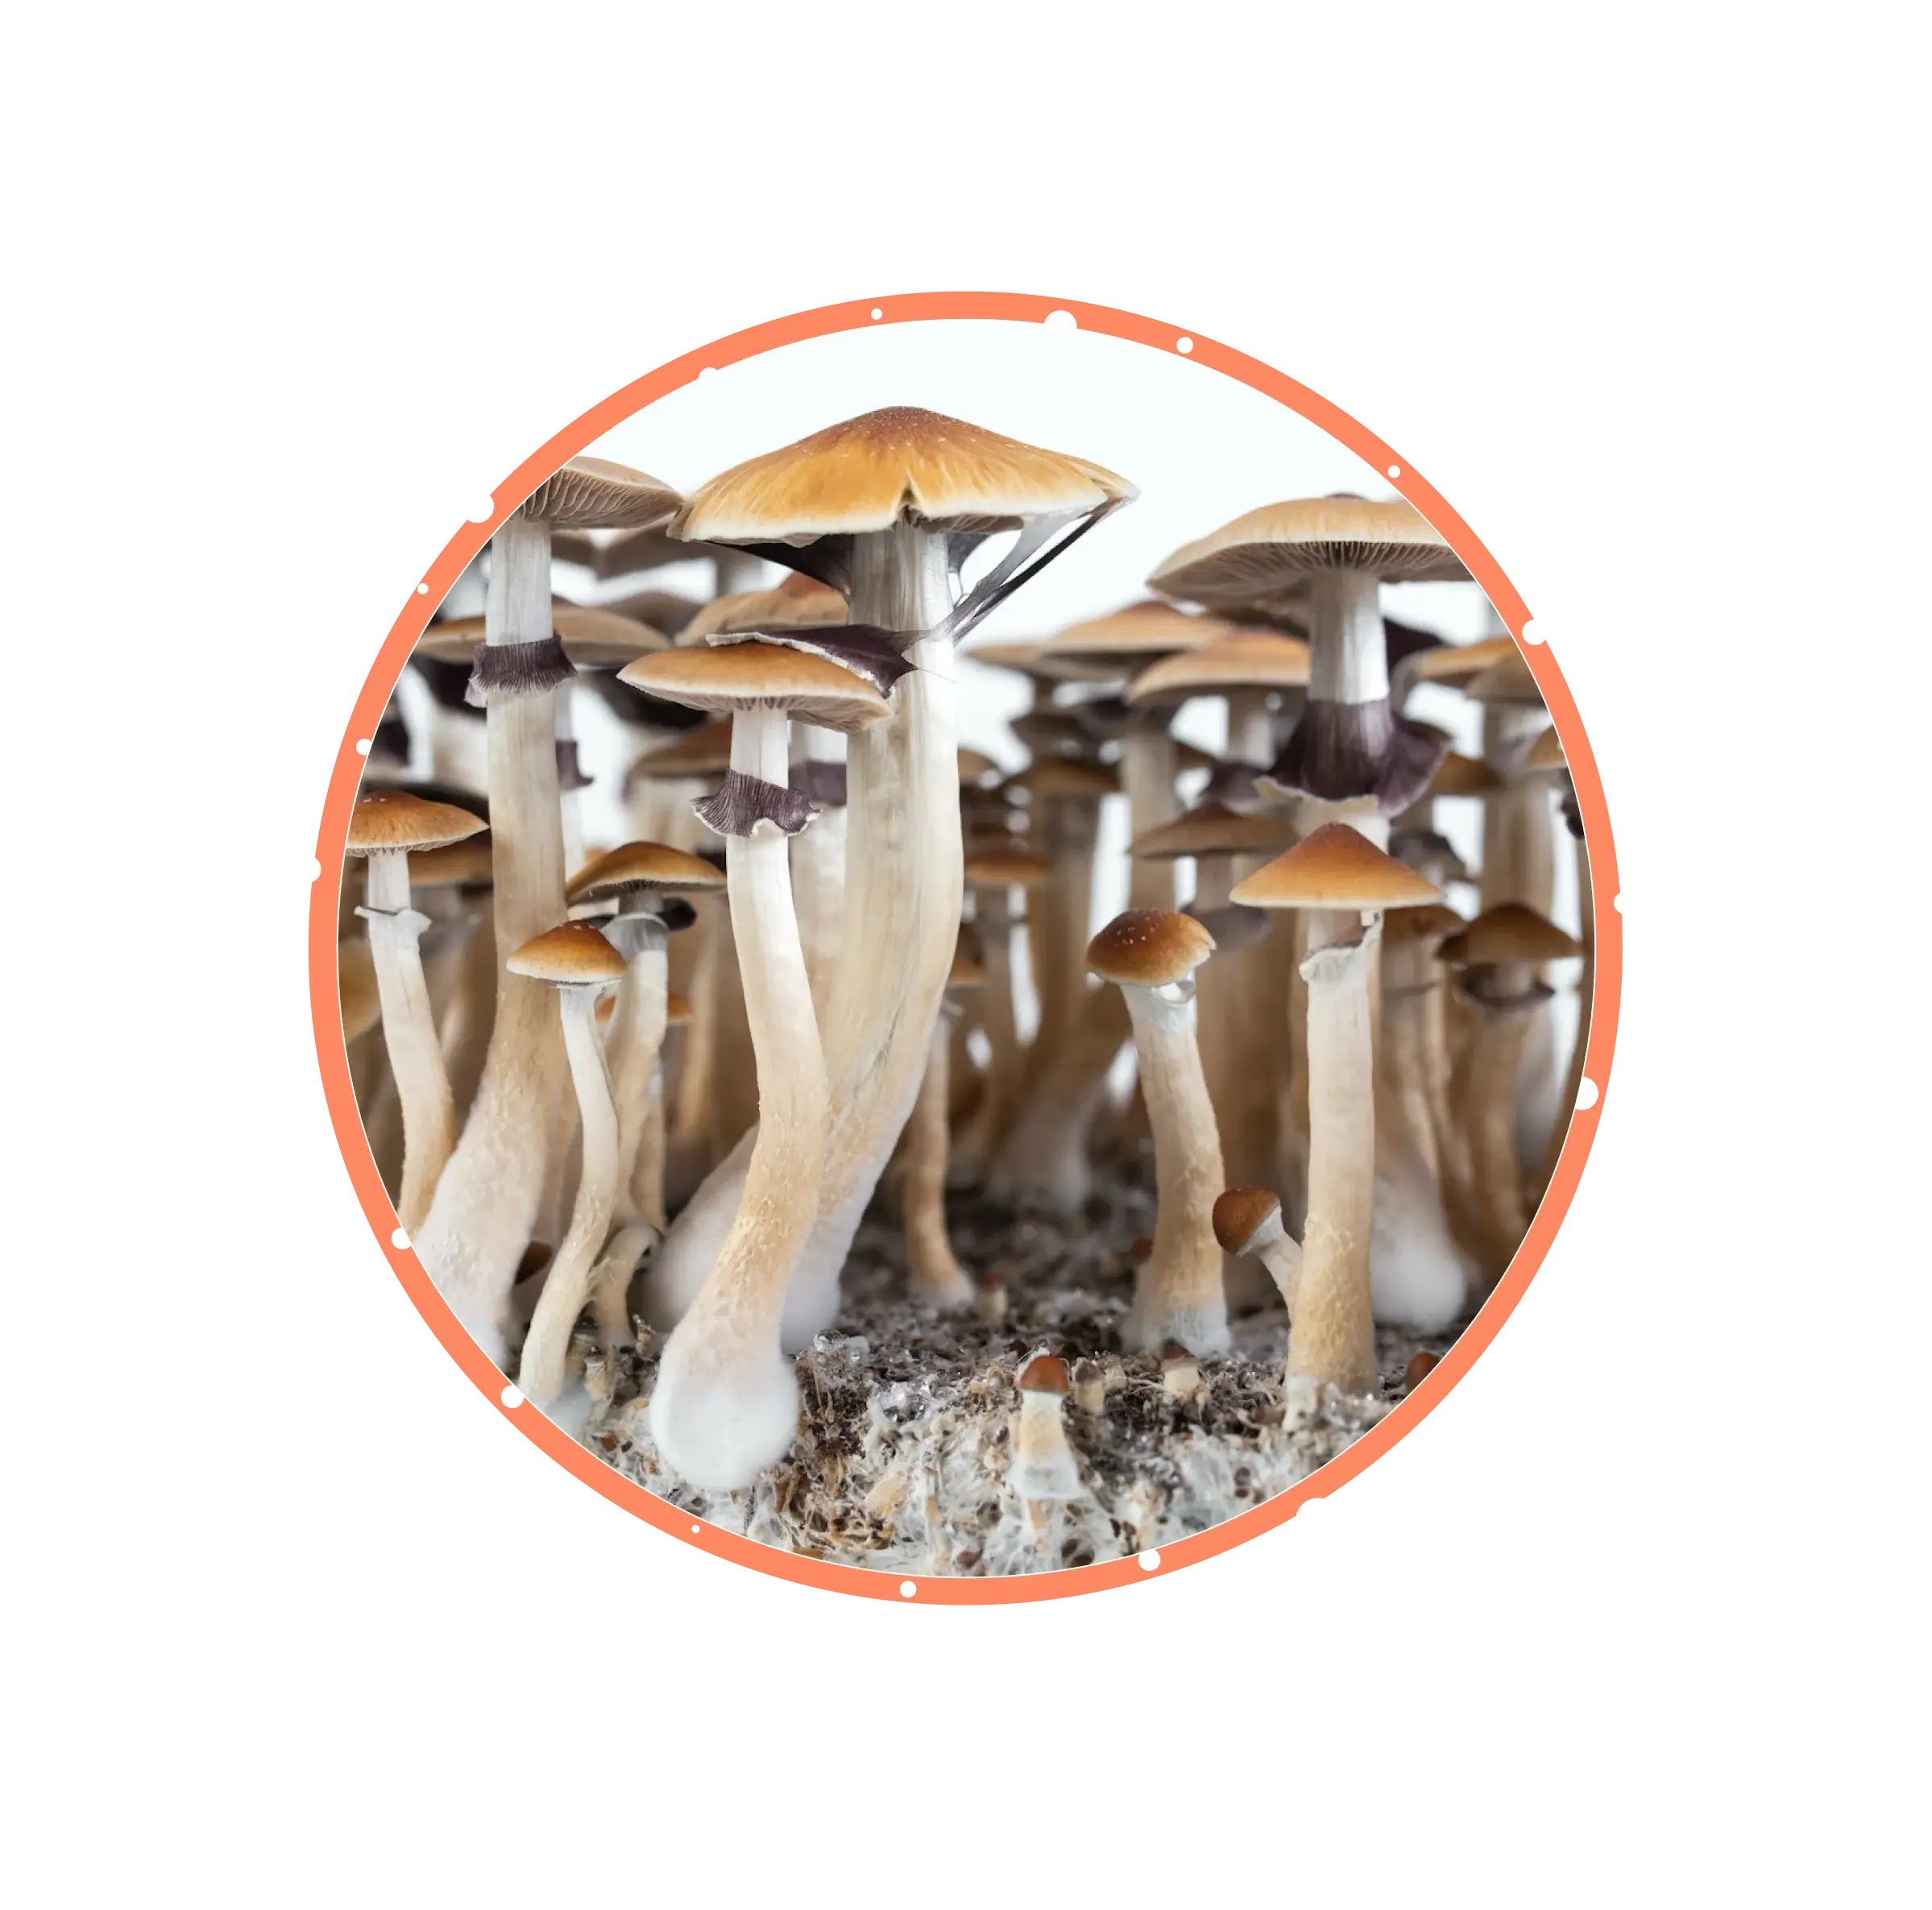 ecuador psilocybin mushroom قارچ سیلوسایبین اکوادور